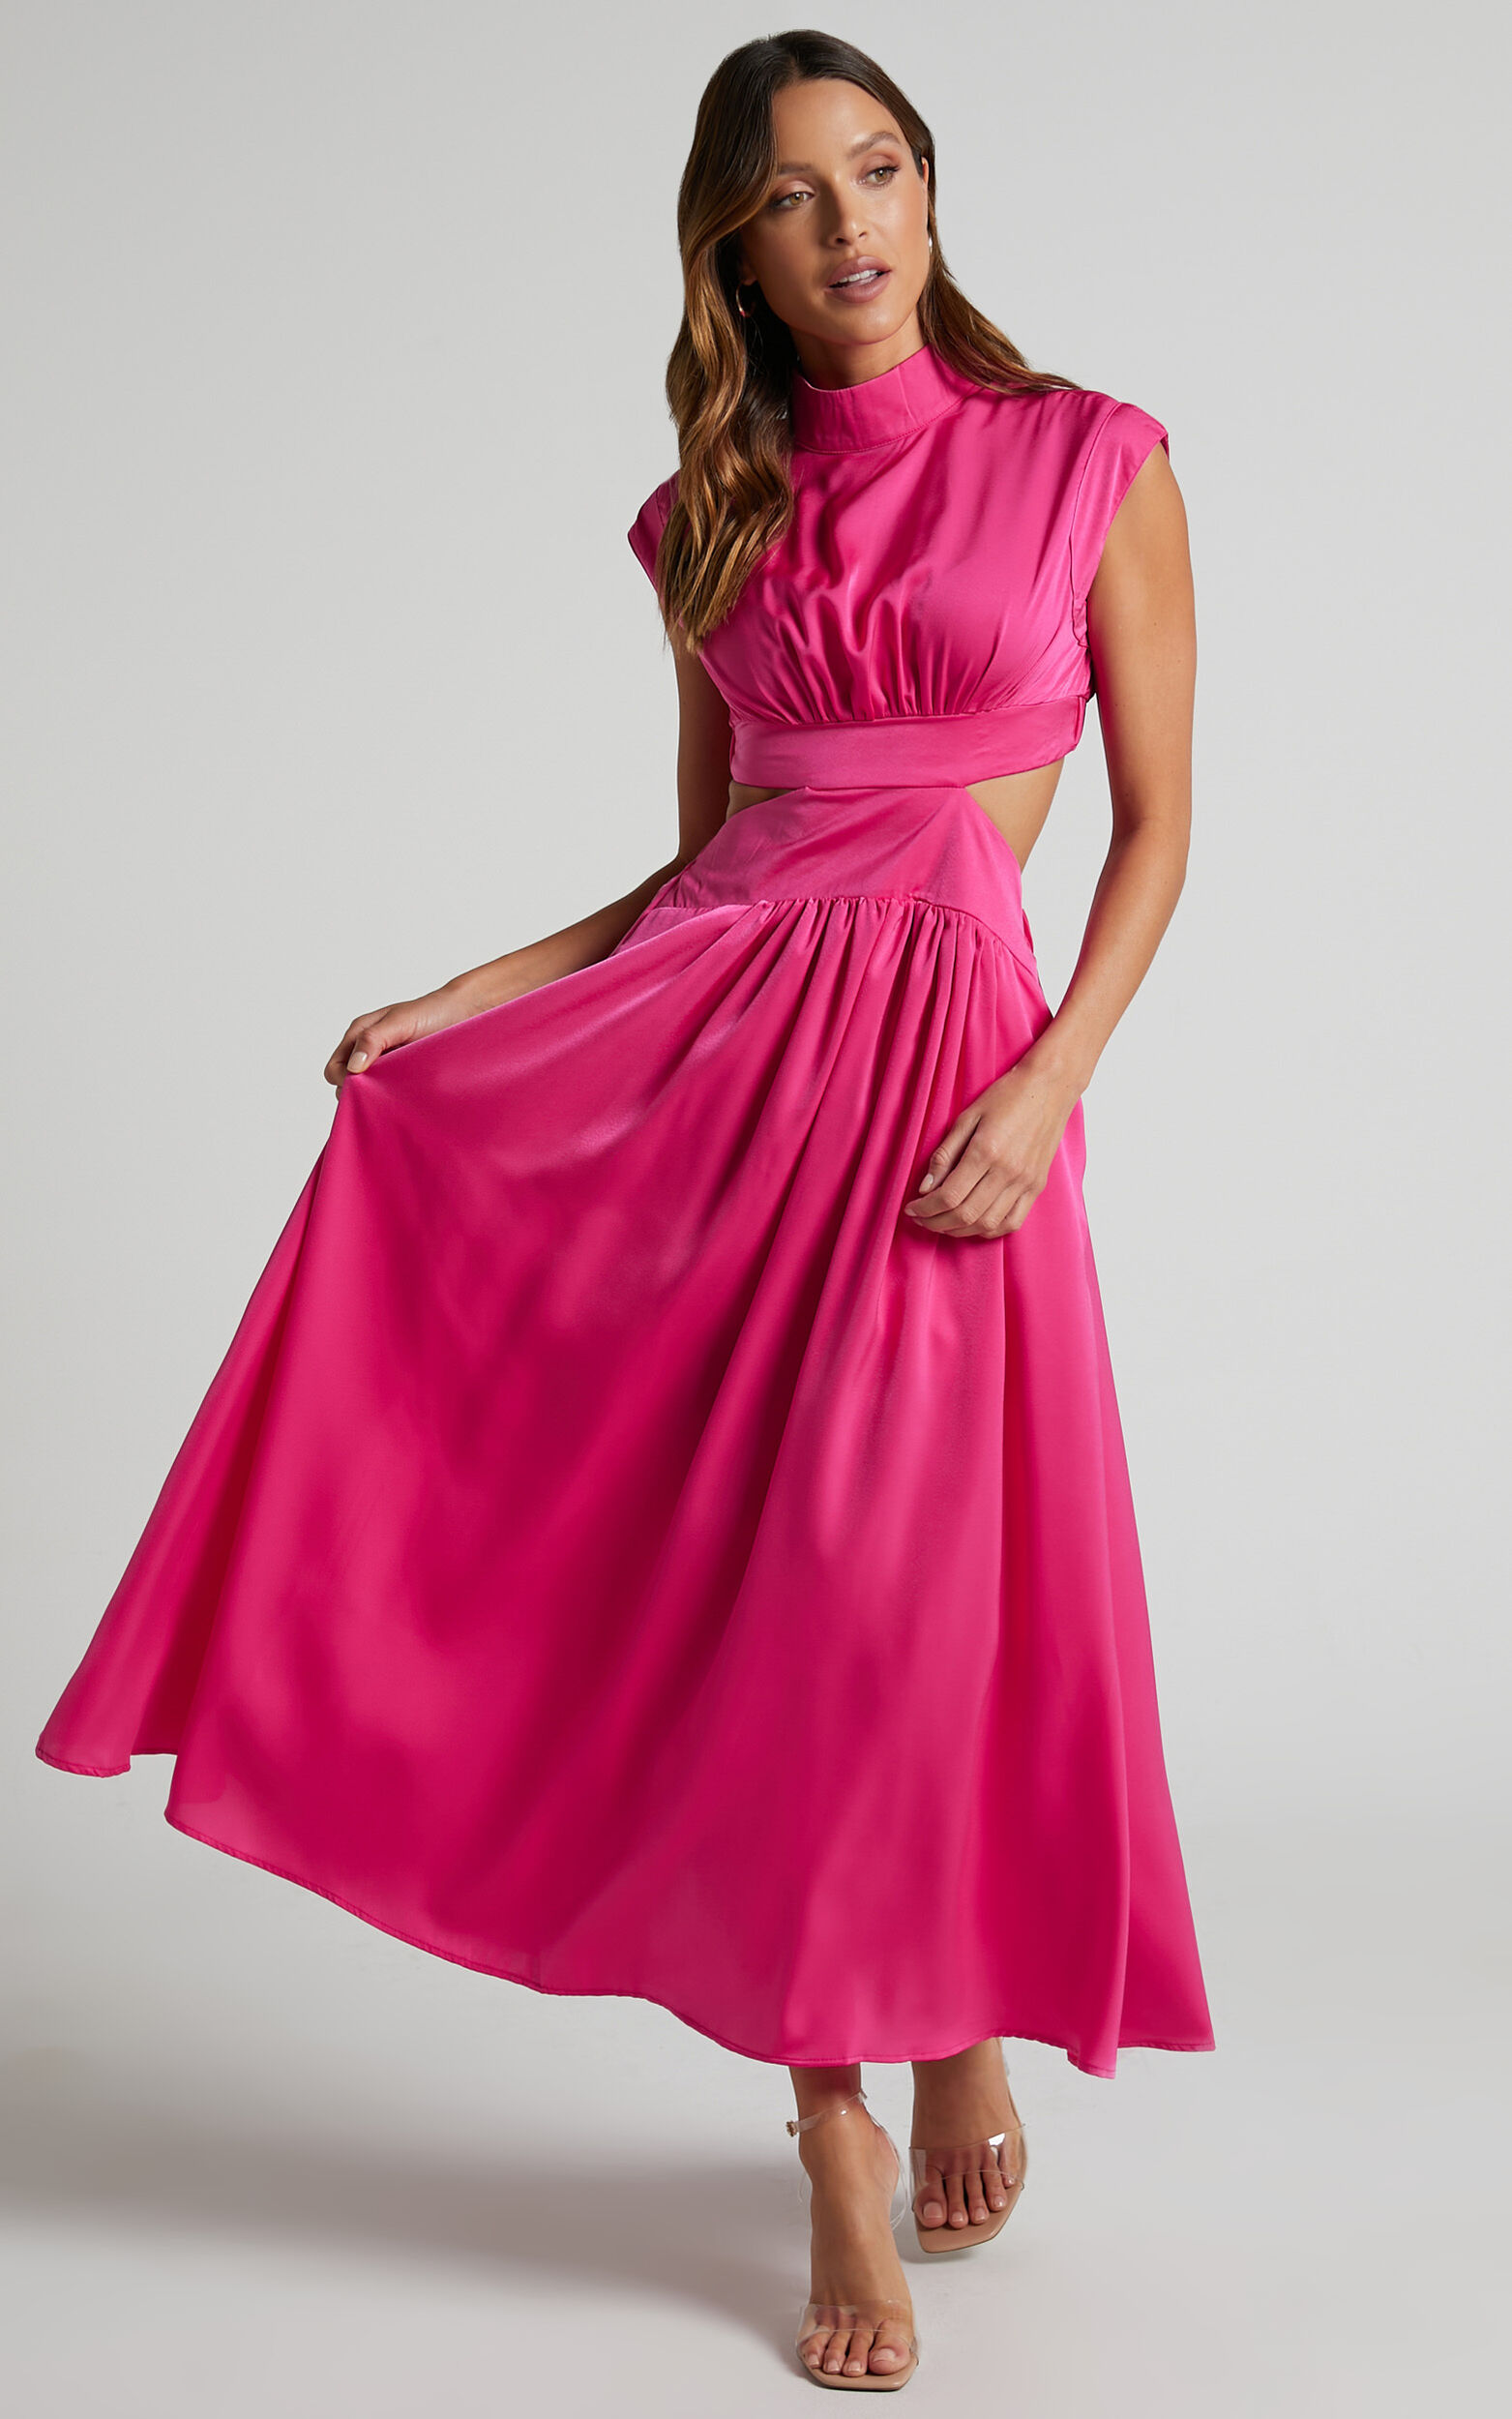 Natalyah Midi Dress - Mock Neck Cut Out Gathered Dress in Pink - 06, PNK1